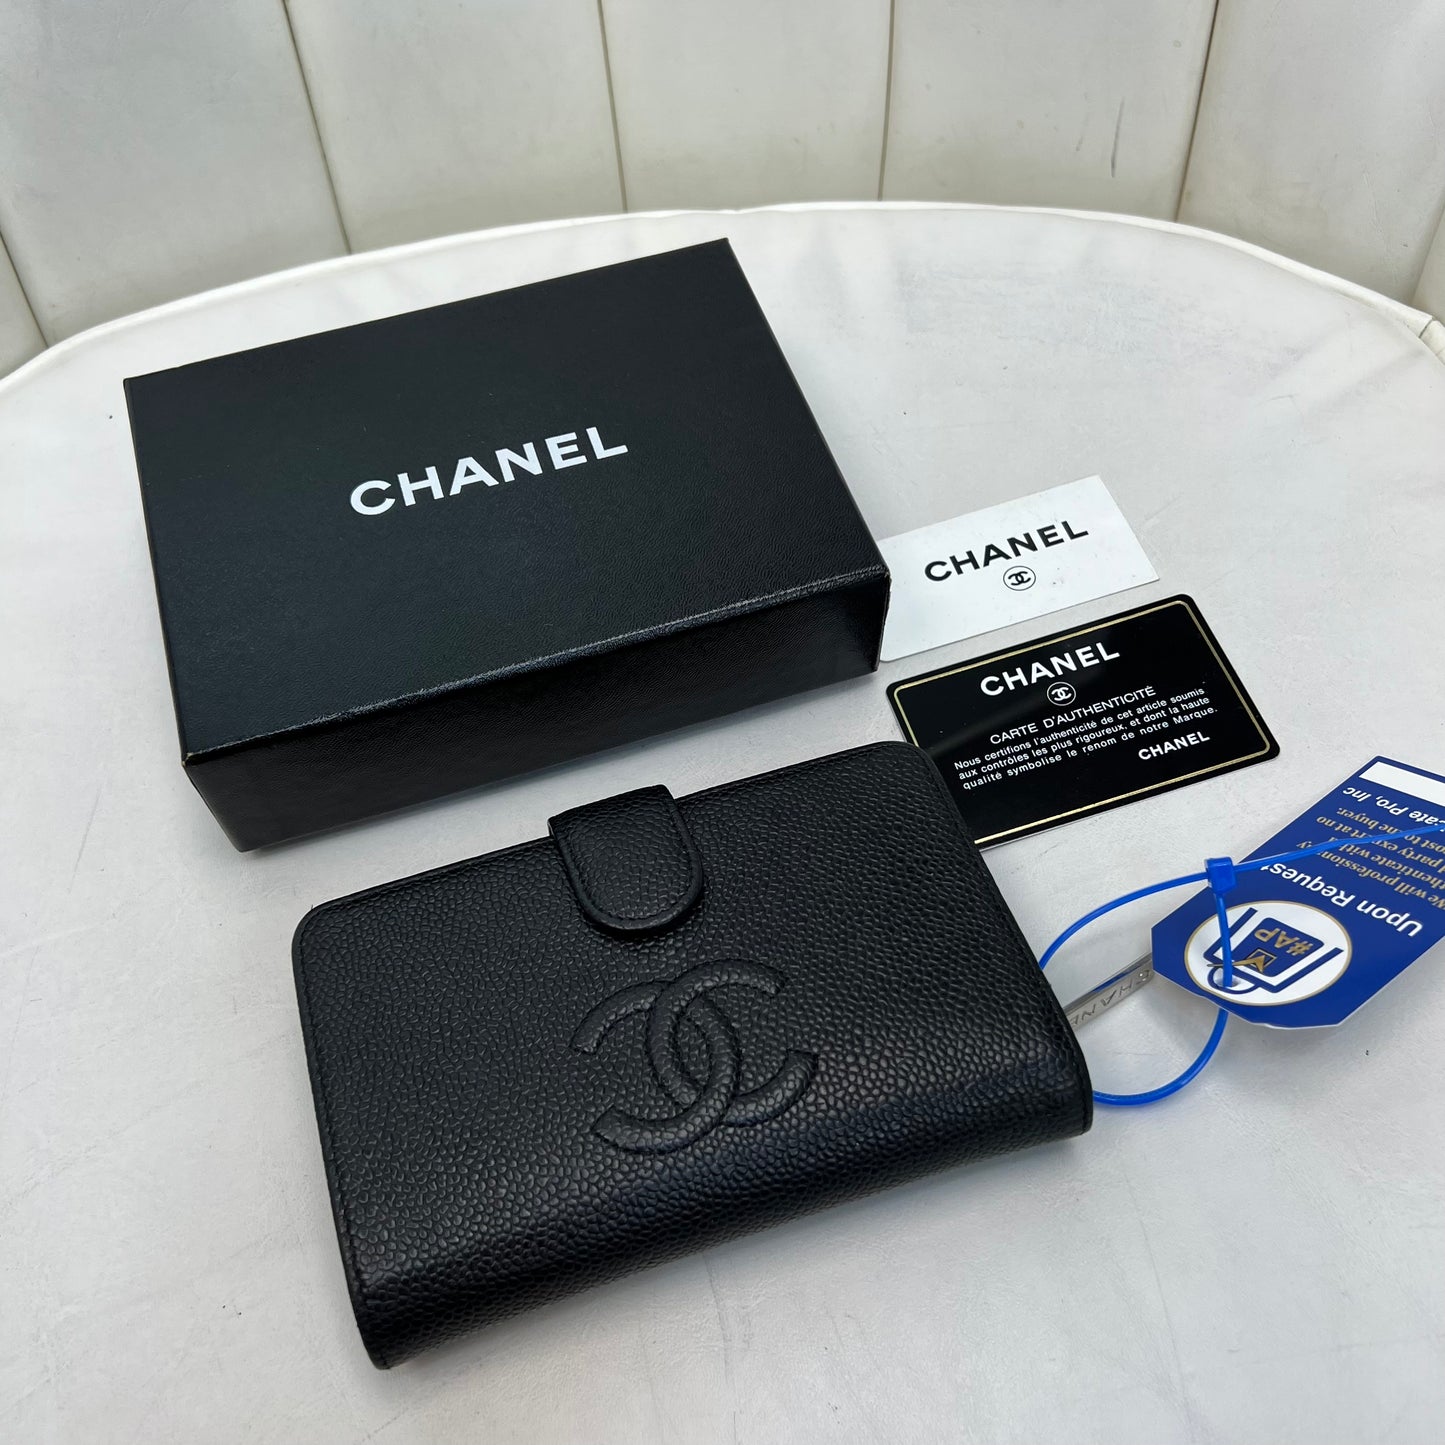 Chanel L-Zip Pocket Wallet